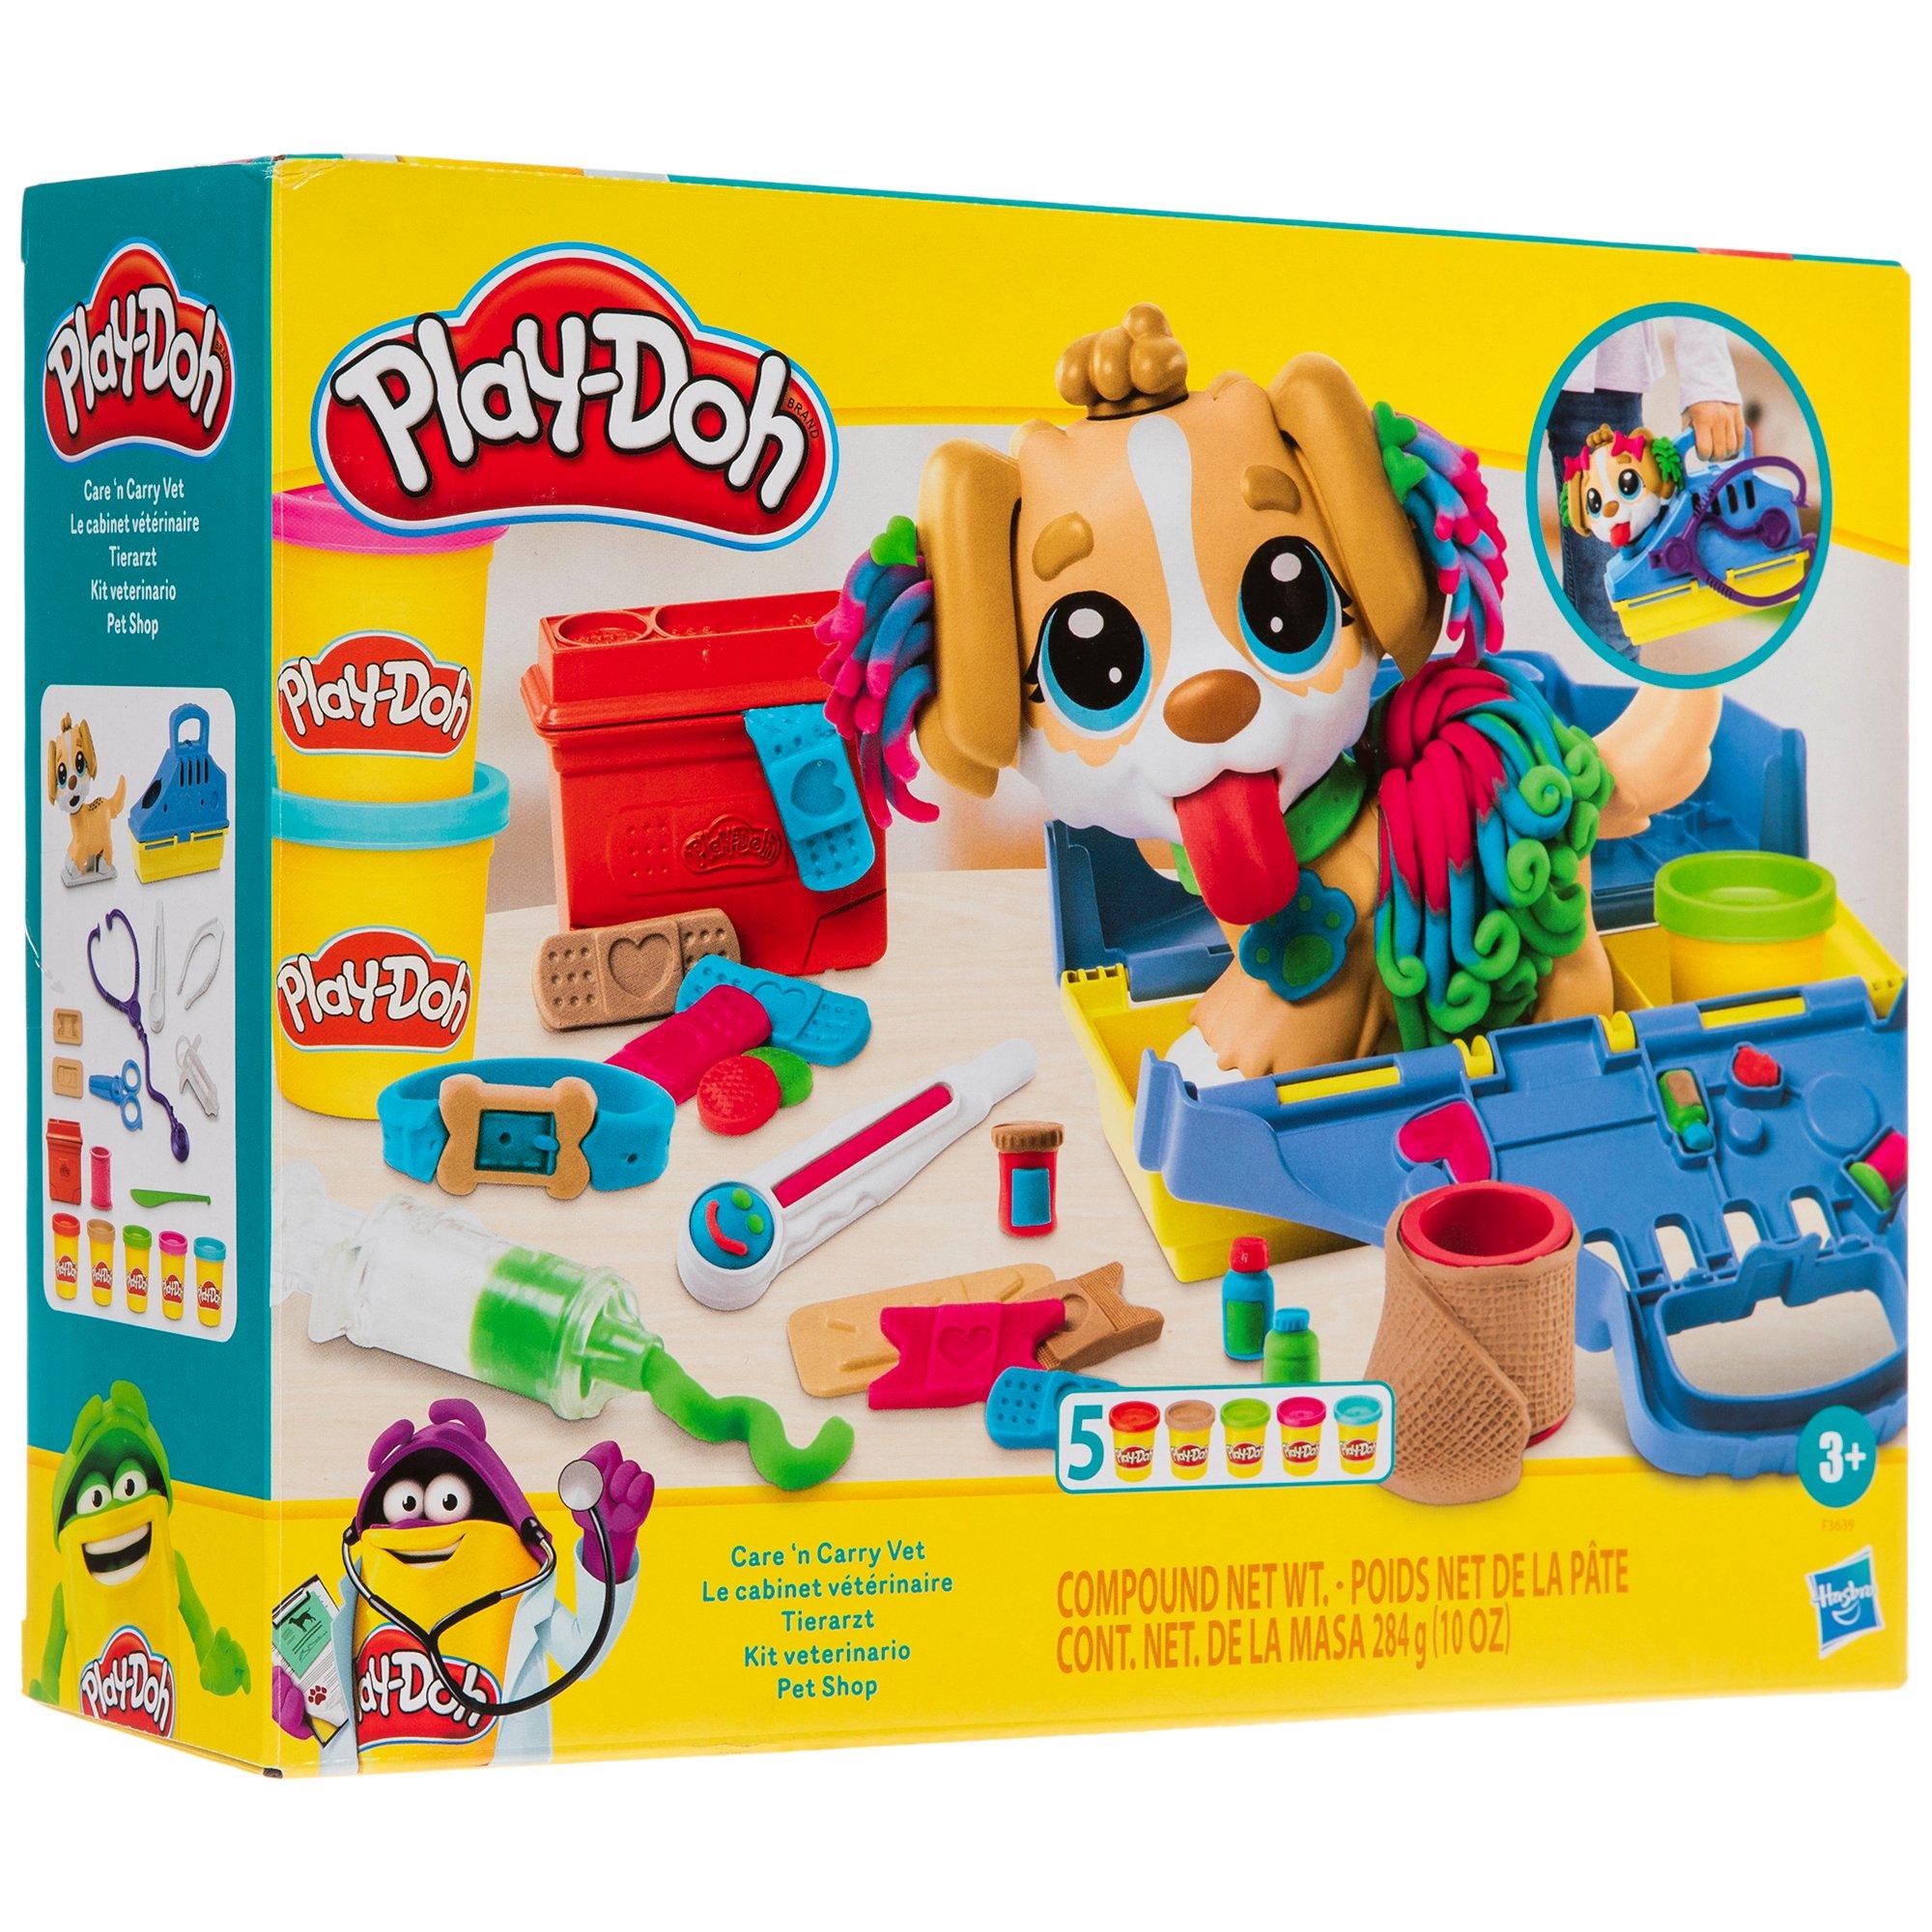 Play-Doh Care 'n Carry Vet Set, 1 ct - Kroger